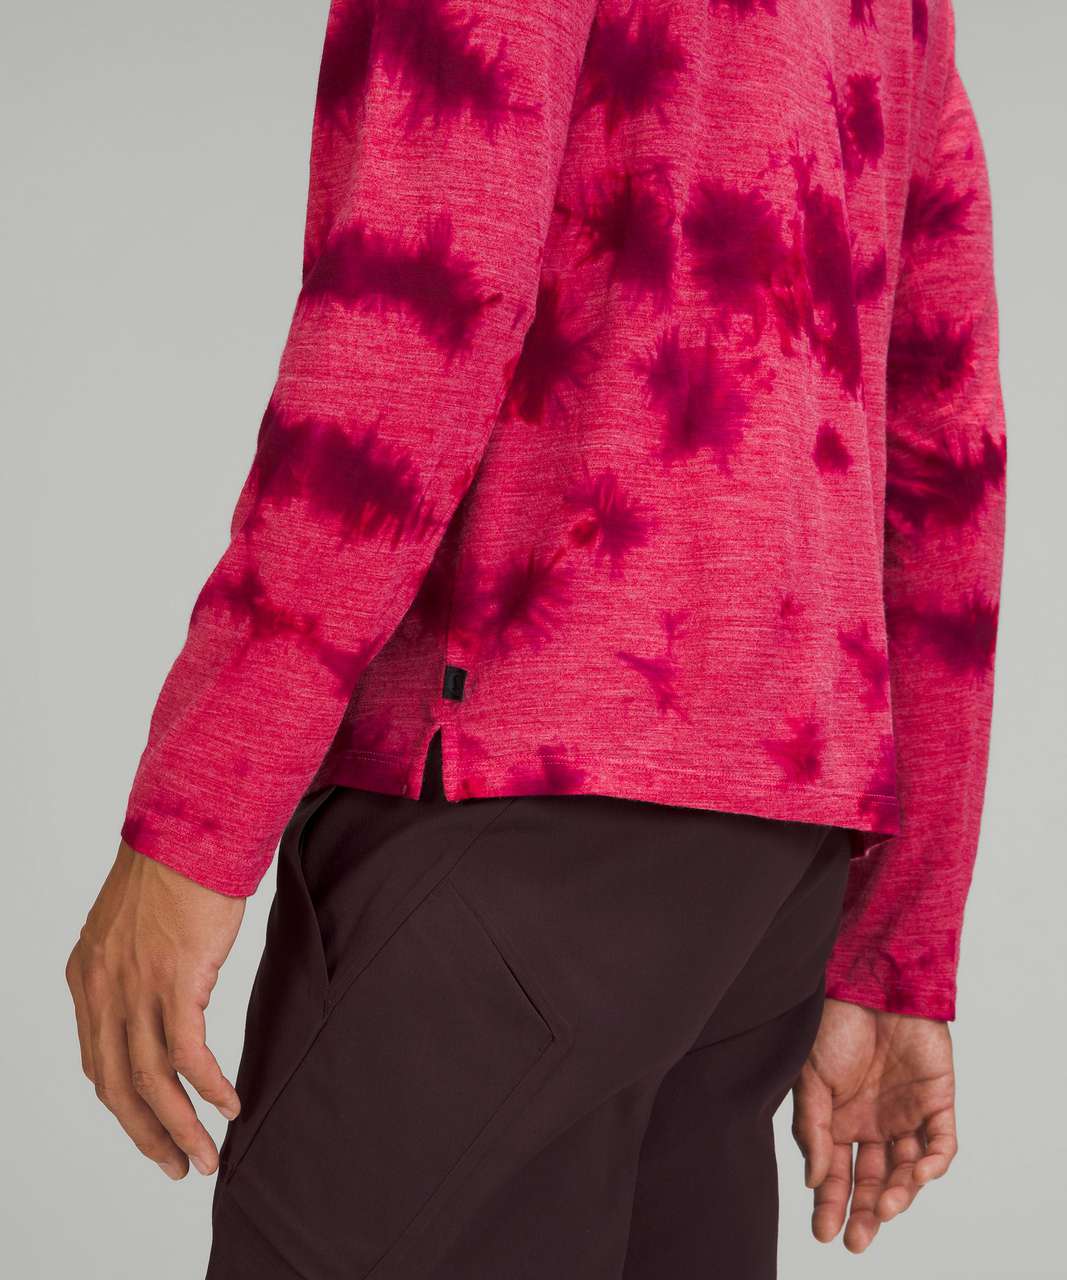 Lululemon lab Wool-Blend Tie Dye Long Sleeve Shirt - Mimic Tie Dye Pink Dragonfruit Wild Berry